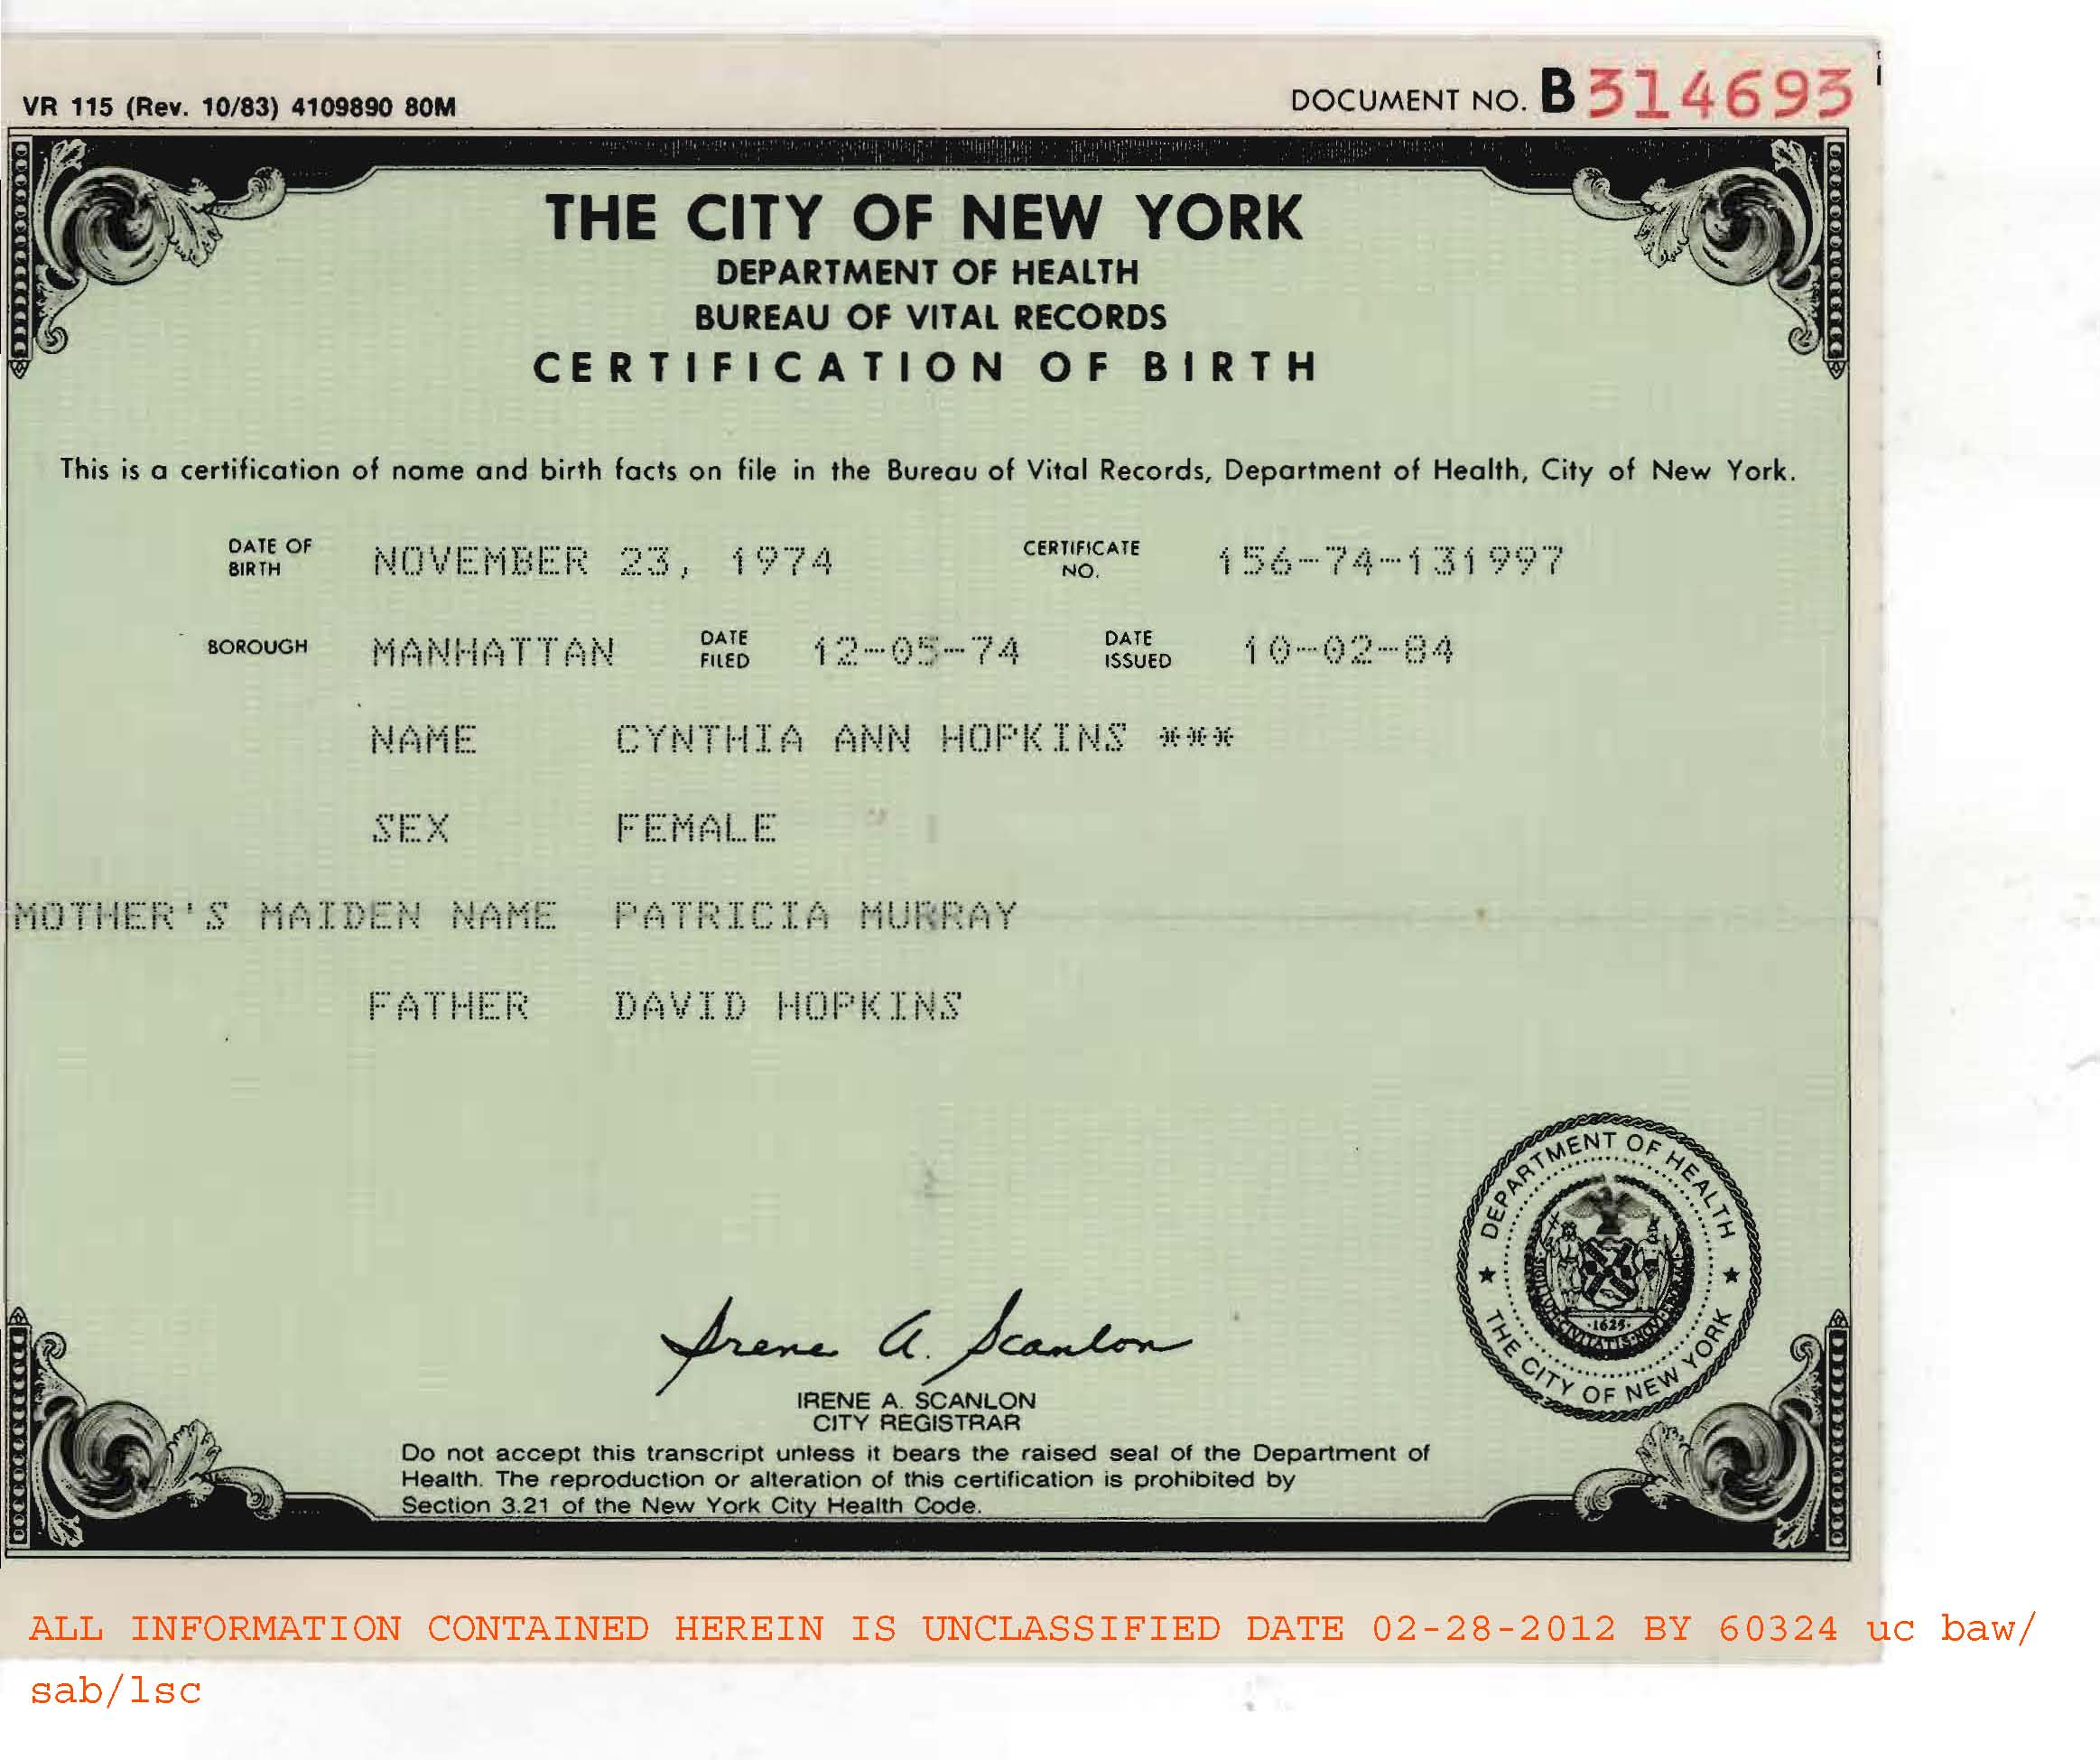 FBI â Fraudulent Birth Certificate of Cynthia Ann Hopkins